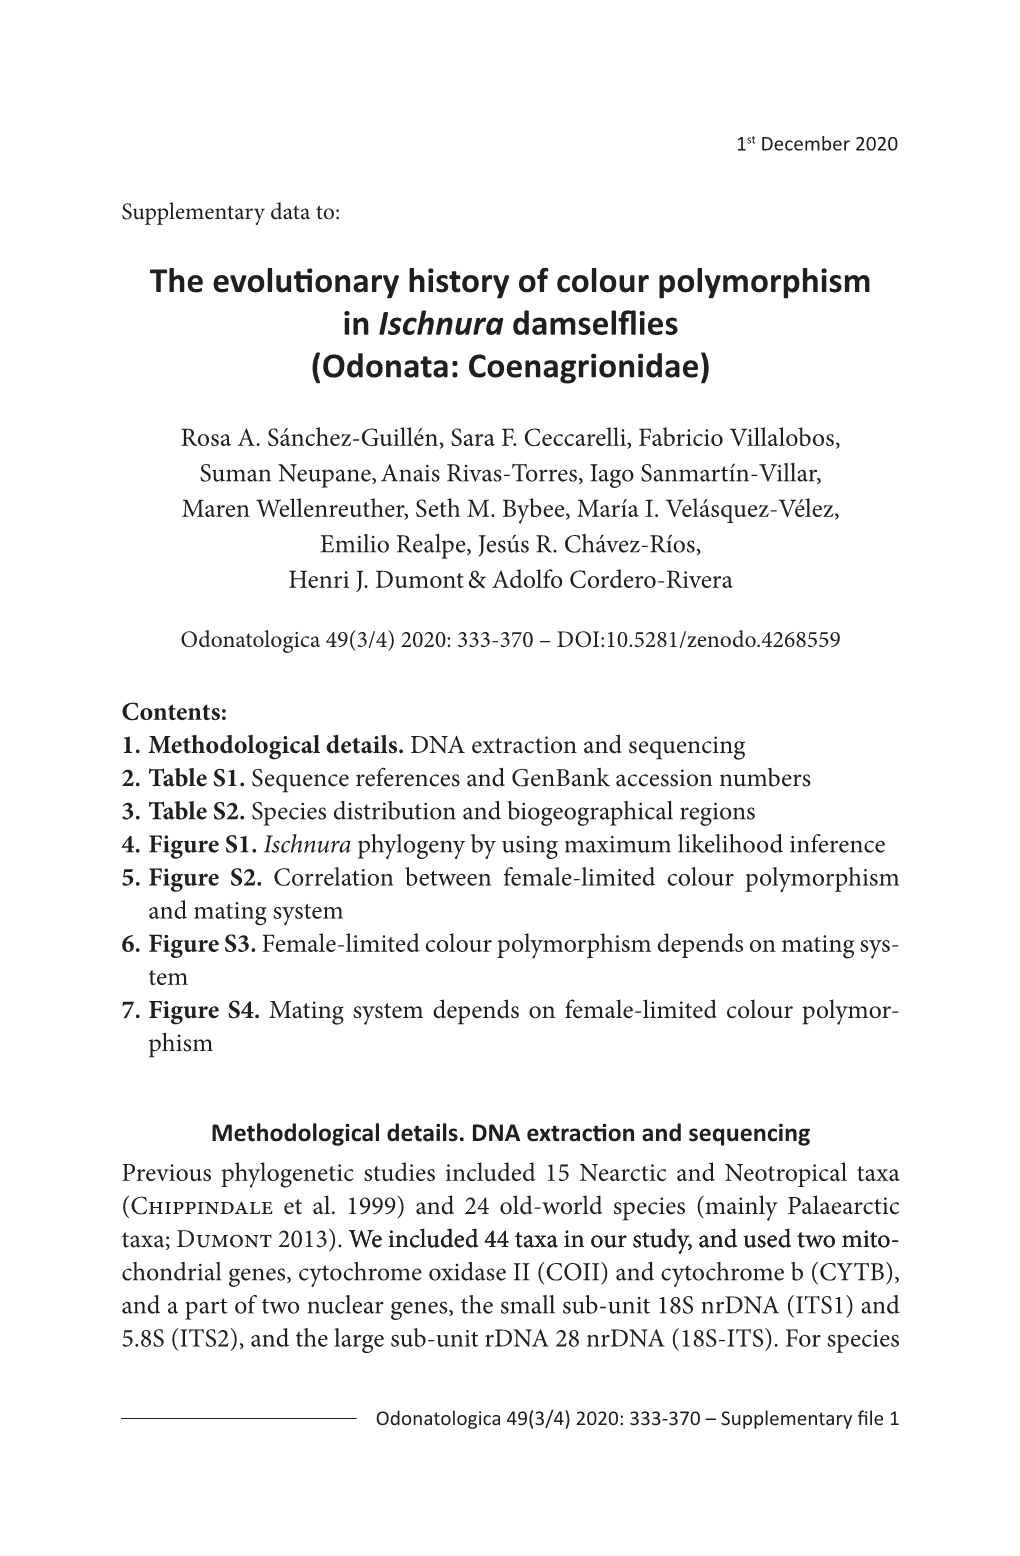 The Evolutionary History of Colour Polymorphism in Ischnura Damselflies (Odonata: Coenagrionidae)